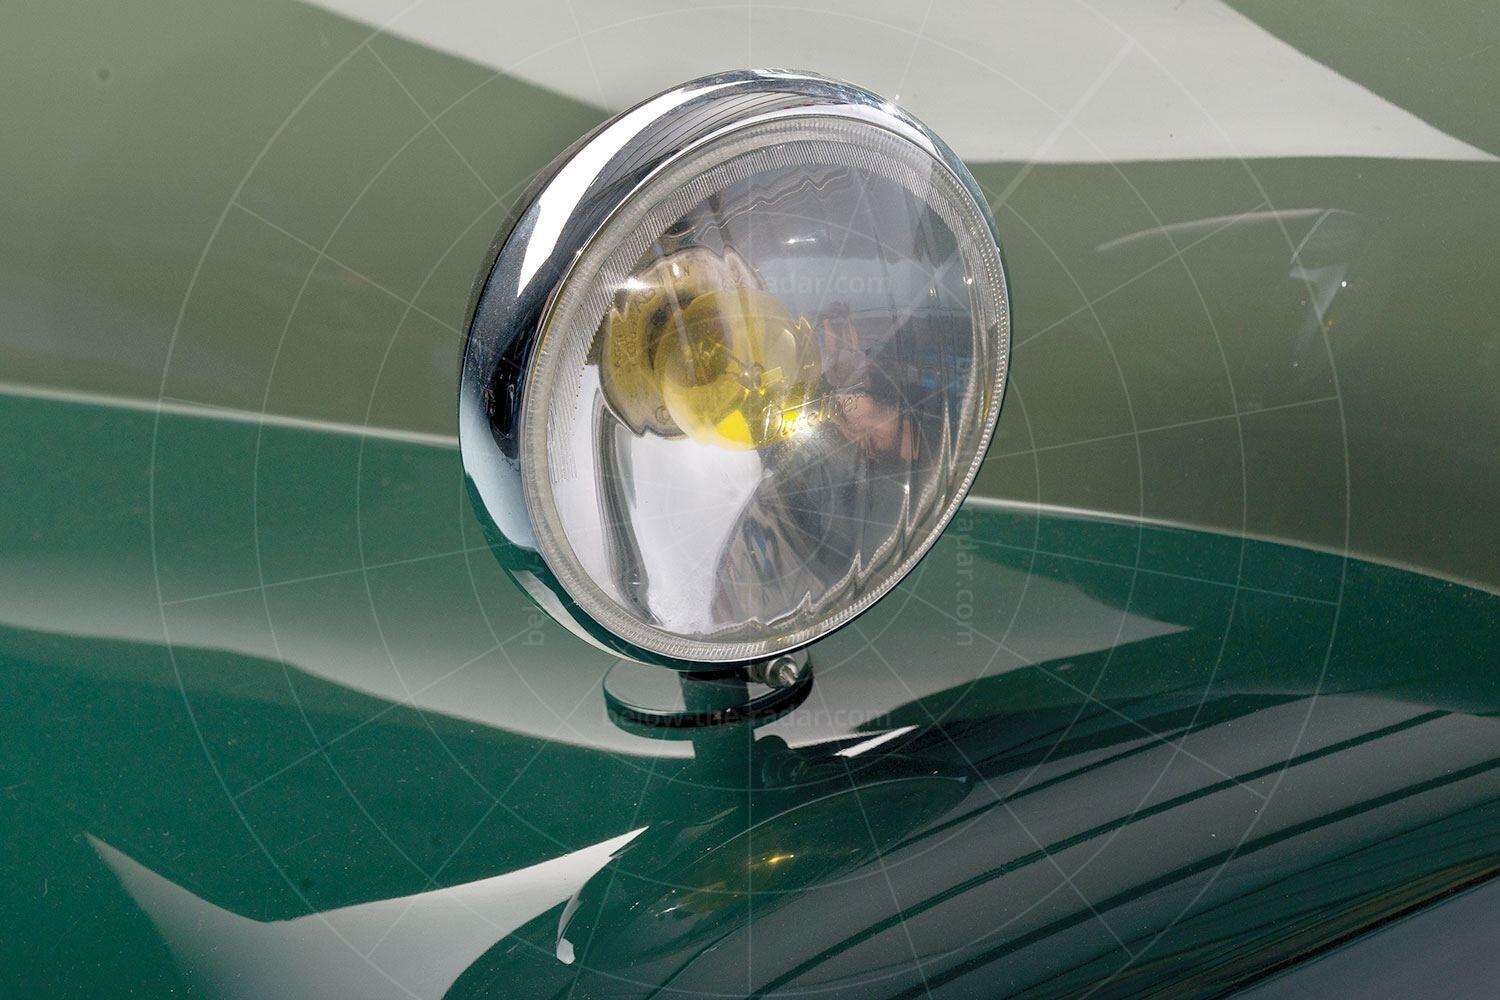 SIL Kover headlight Pic: RM Sotheby's | SIL Kover headlight